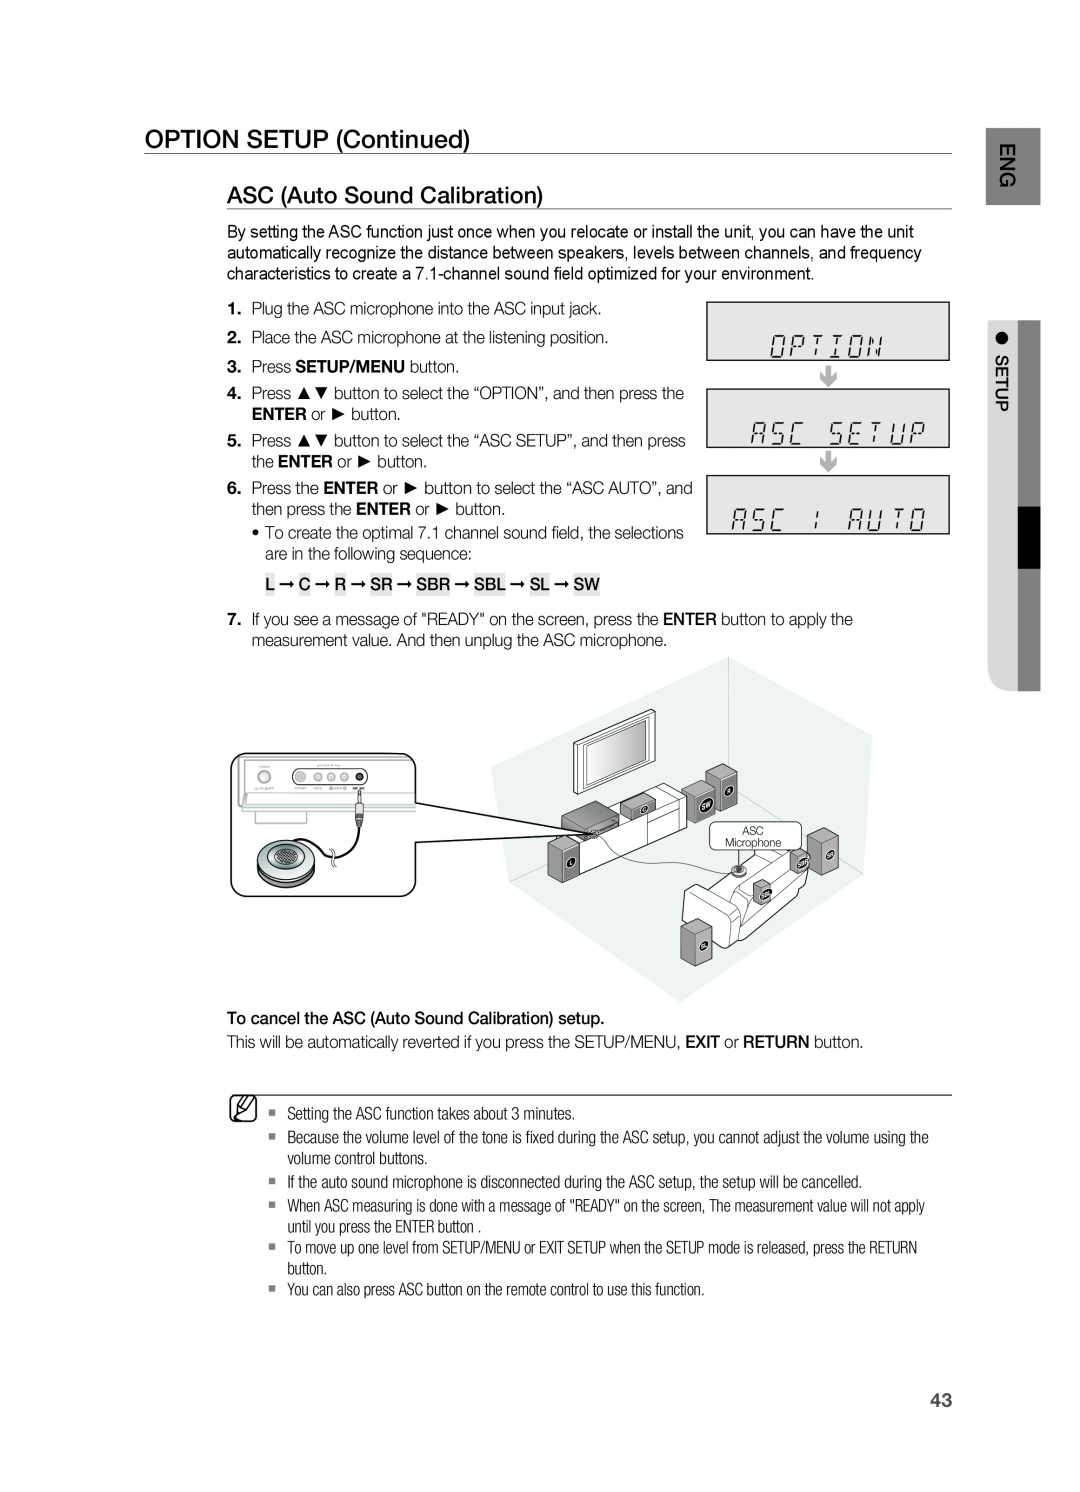 Samsung HT-AS730ST user manual option setup Continued, ASC Auto Sound Calibration 